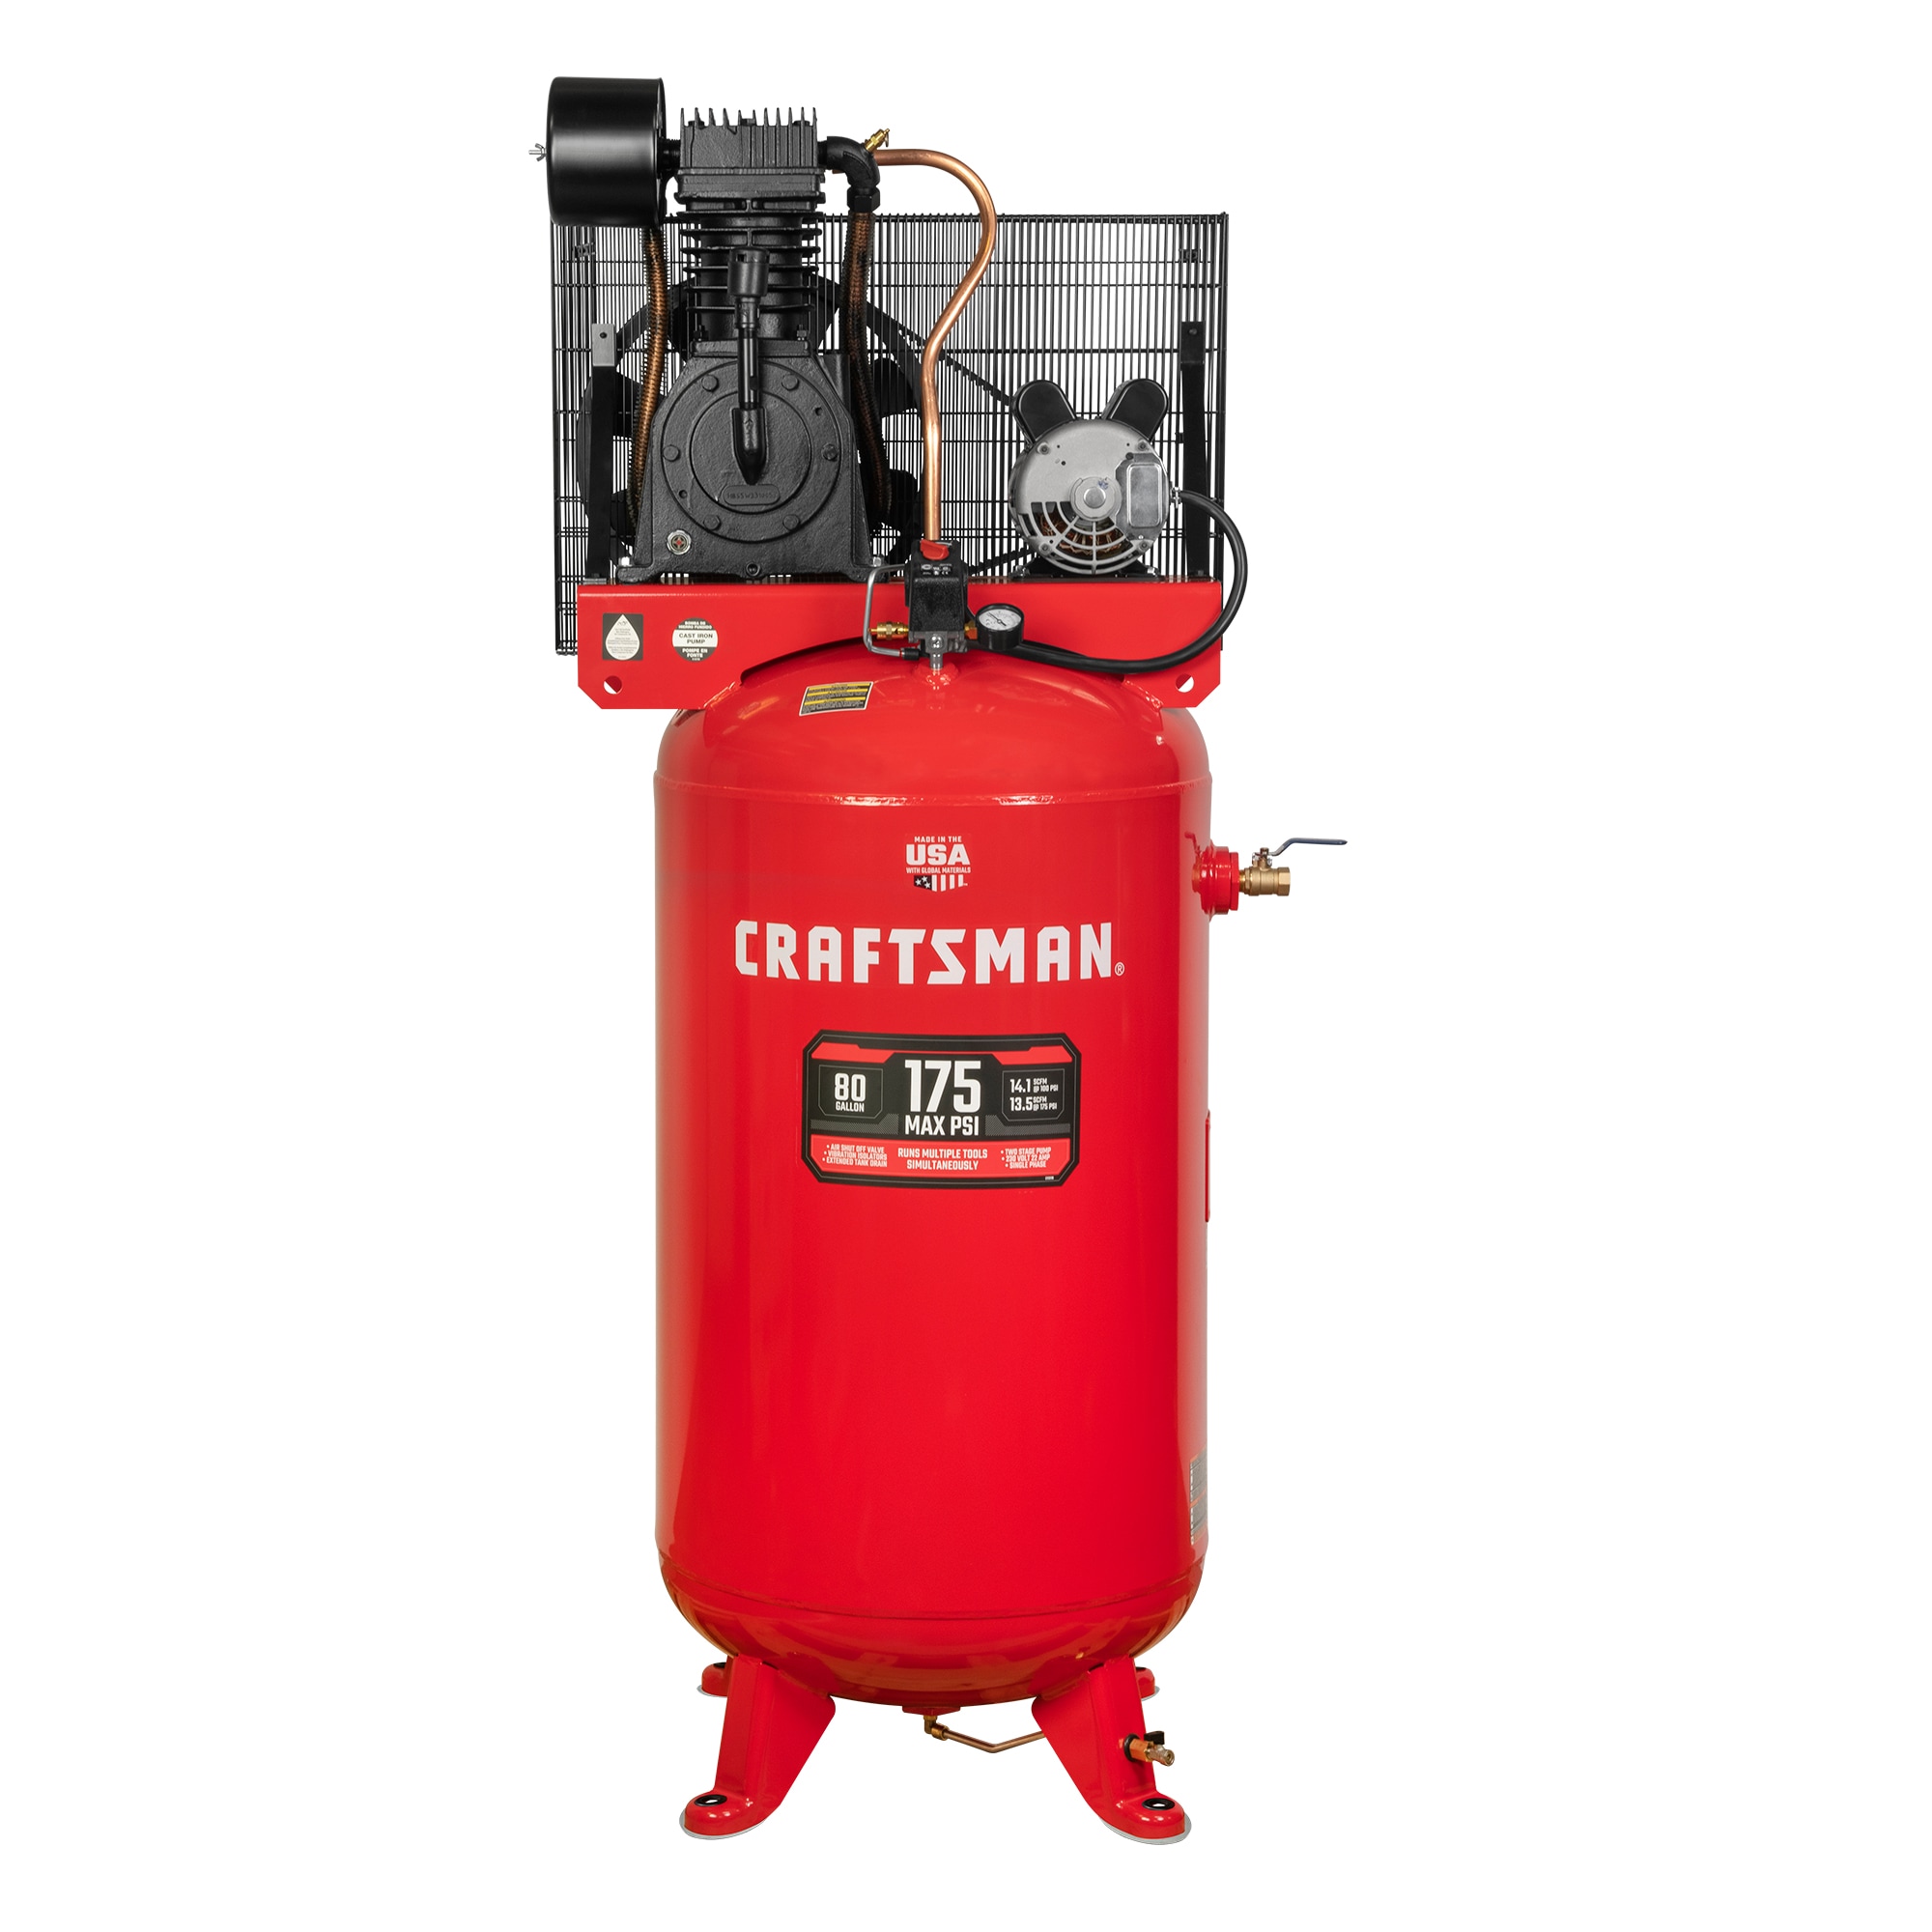 Craftsman 5hp 20 gallon compressor with air hose & reel